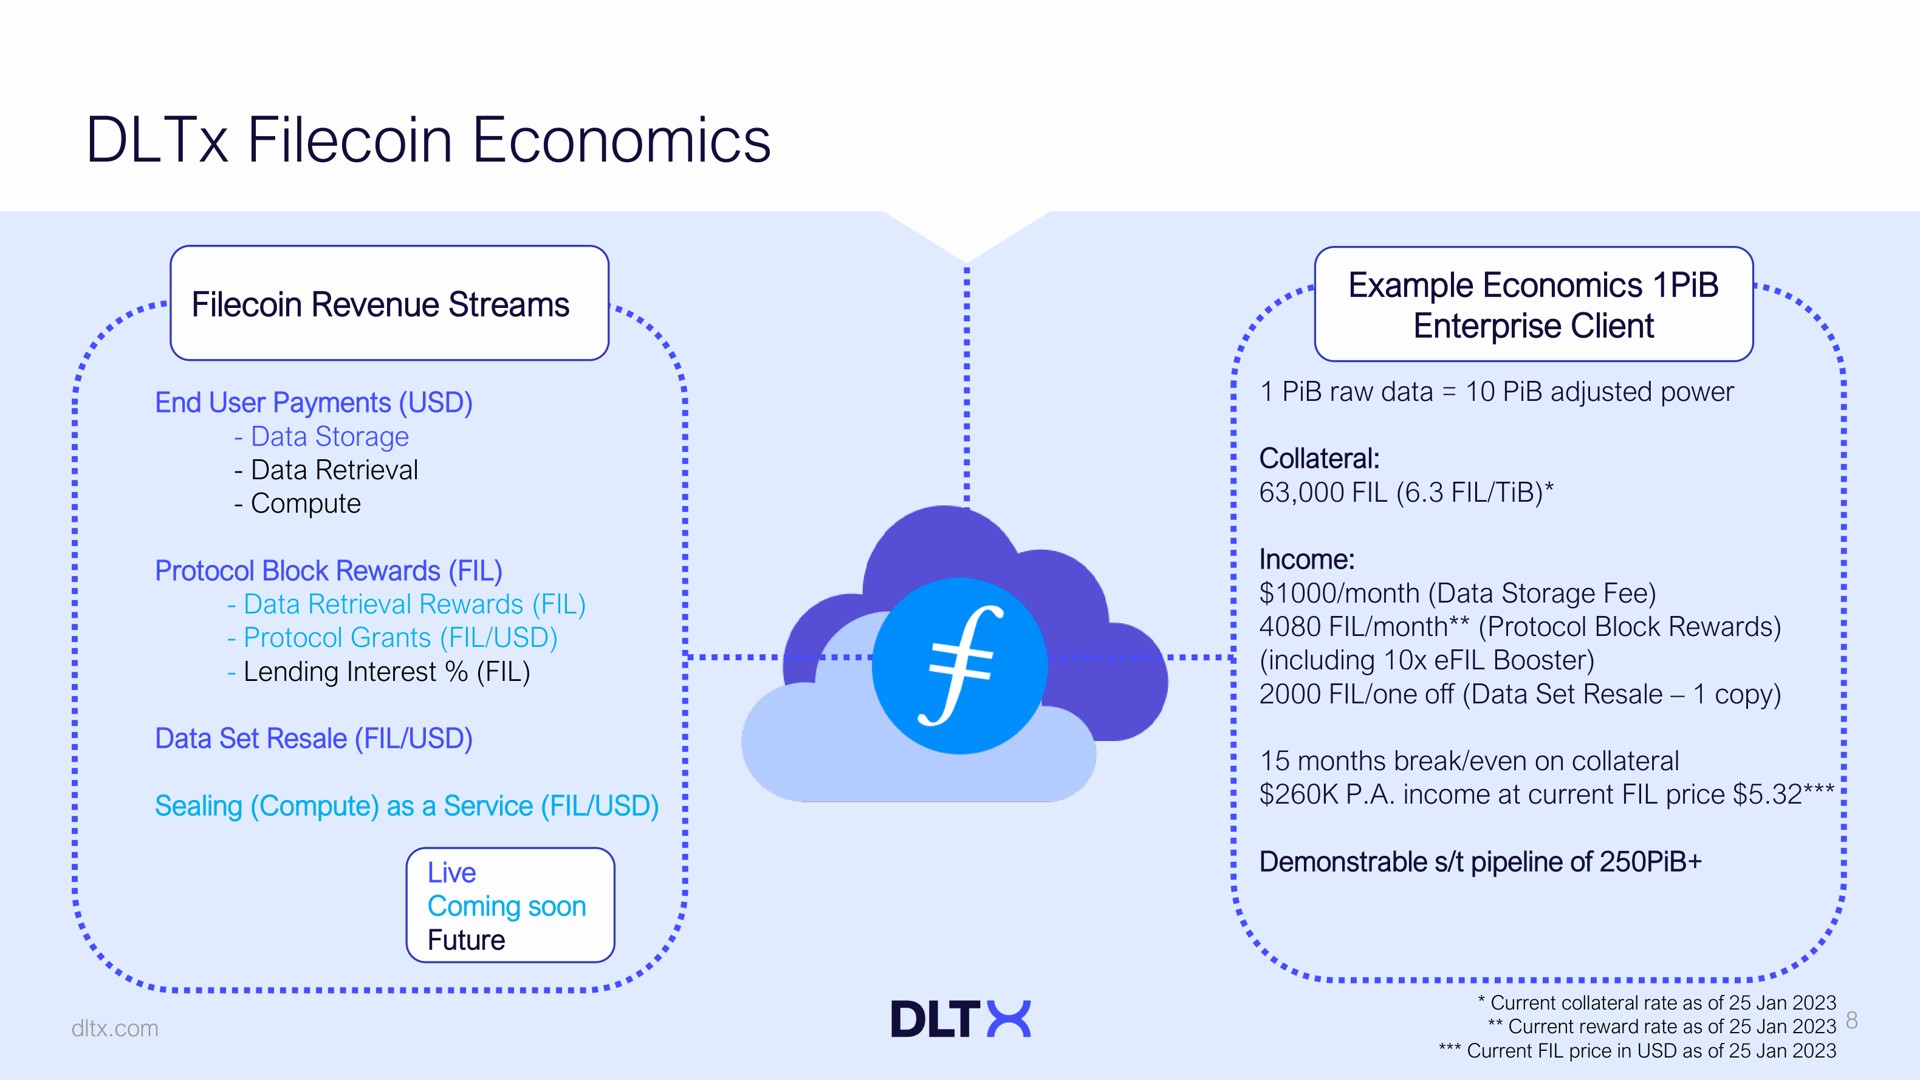 economics | DLTx